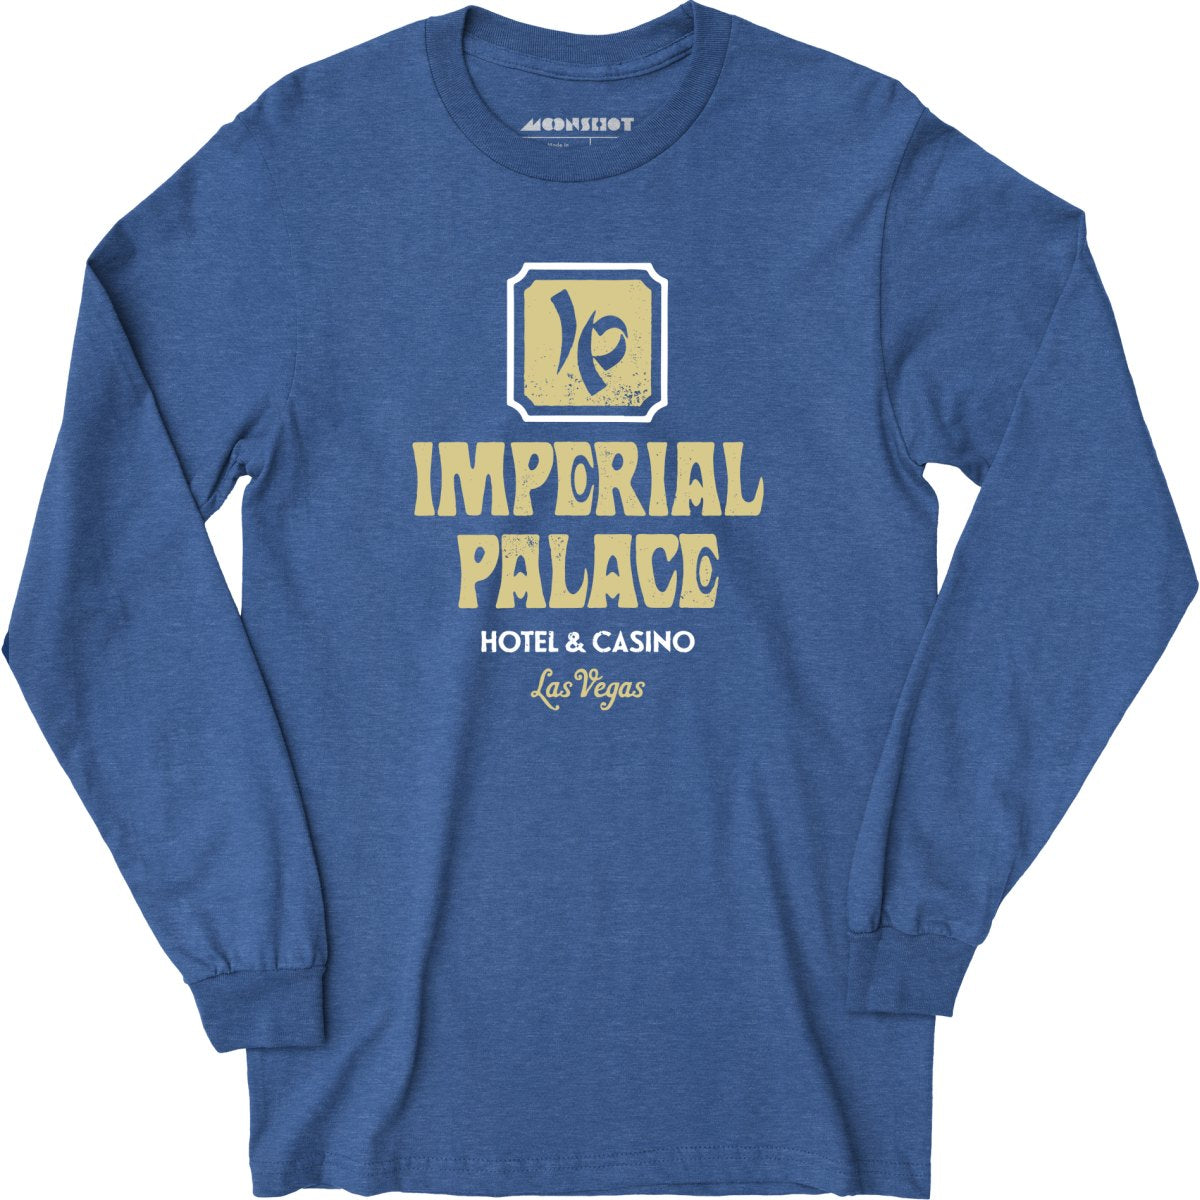 Imperial Palace Hotel & Casino - Vintage Las Vegas - Long Sleeve T-Shirt